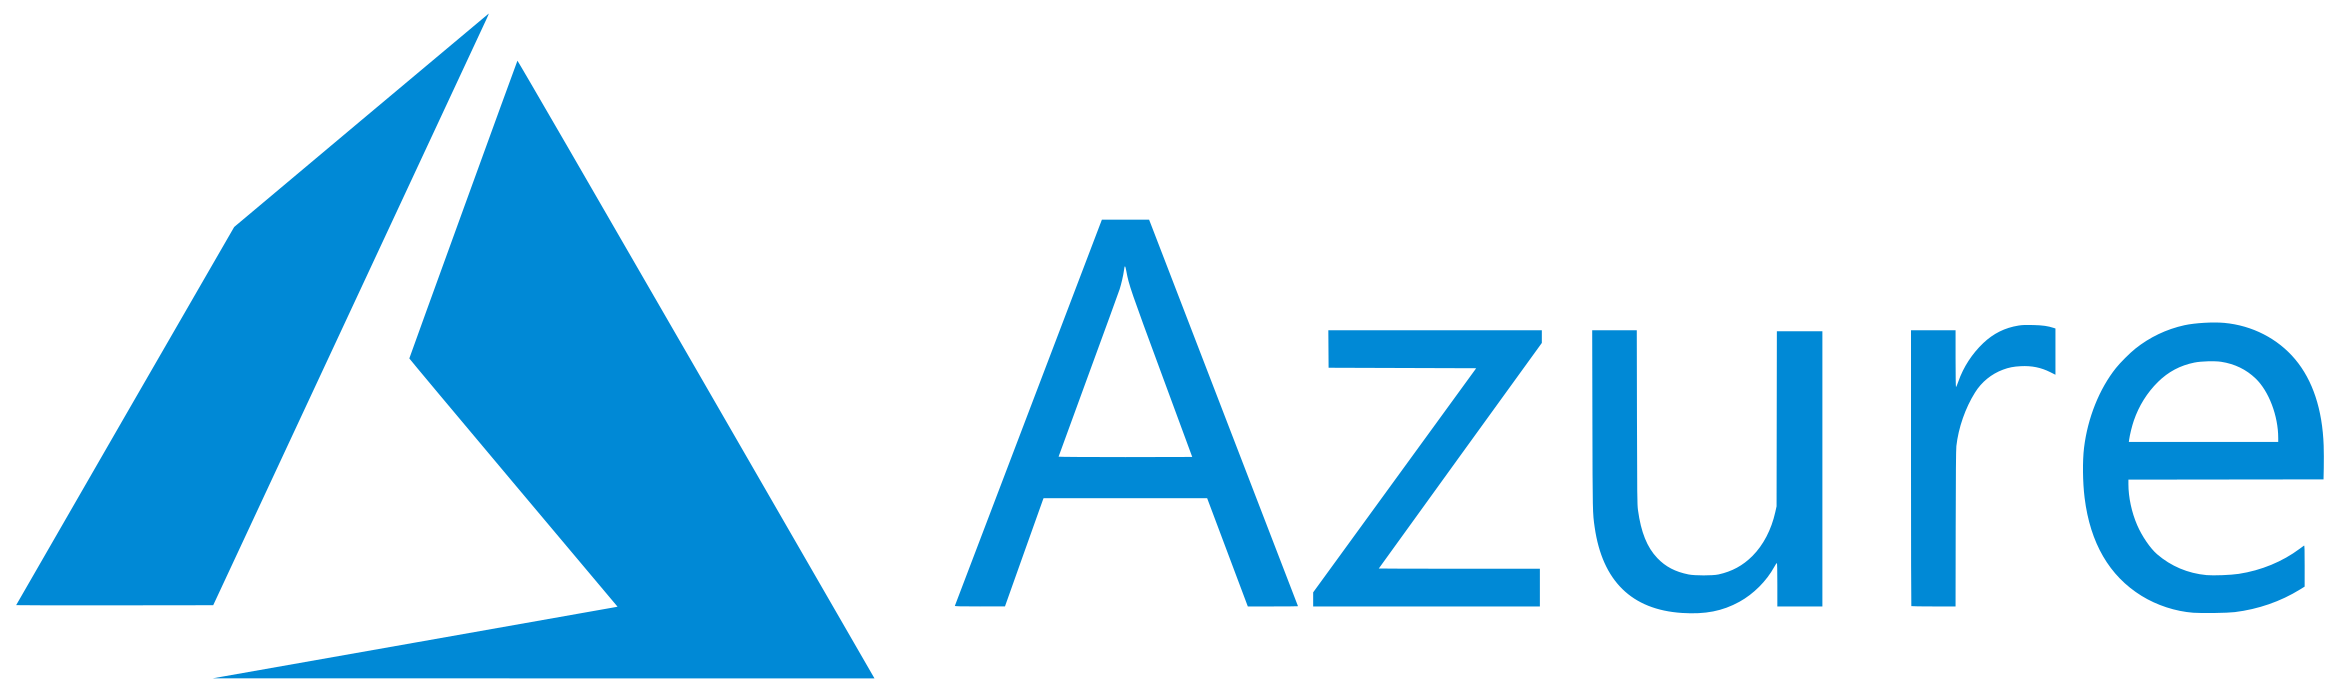 azure logo